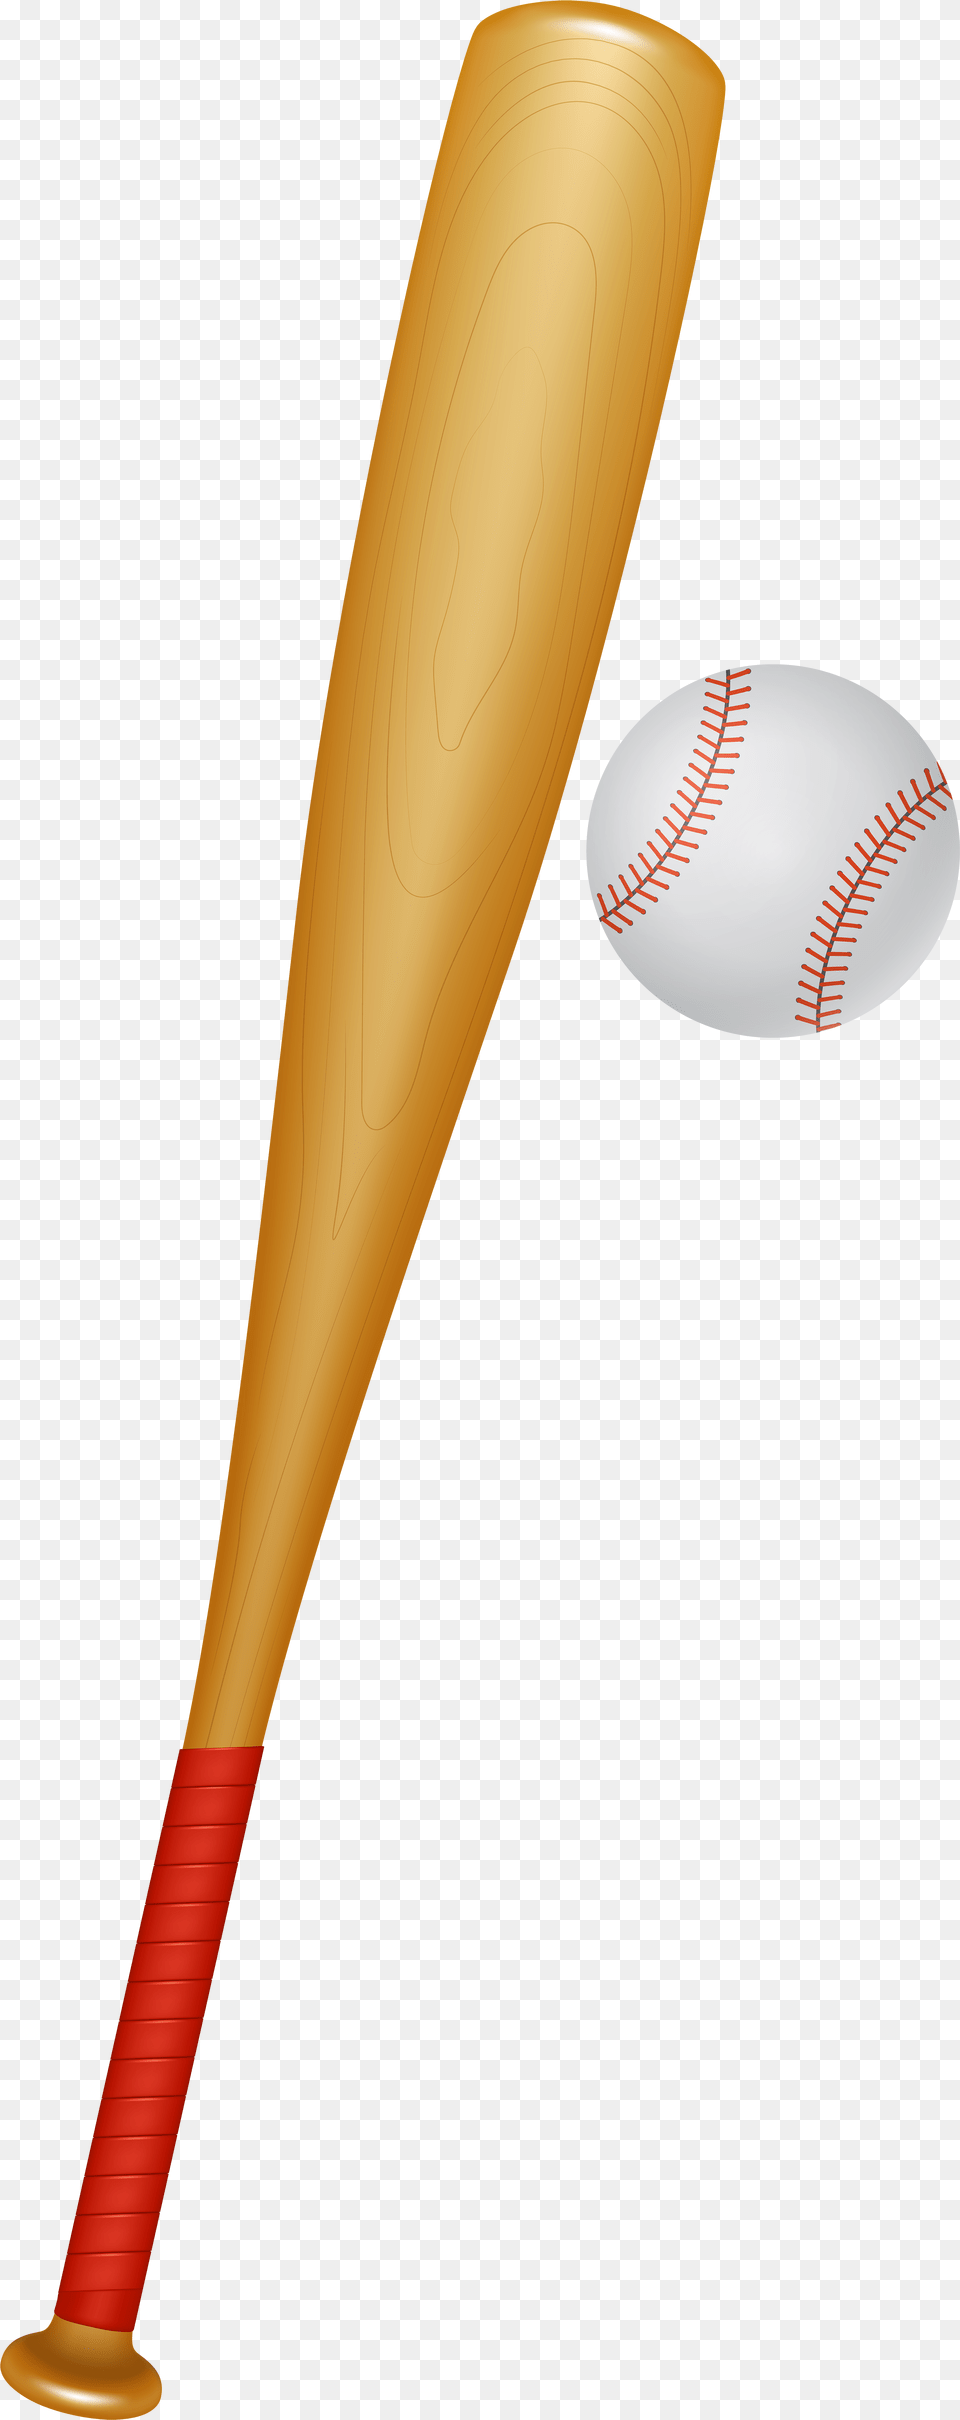 Baseball Bat Clipart Format Baseball And Bat, Ball, Baseball (ball), Baseball Bat, Sport Free Png Download